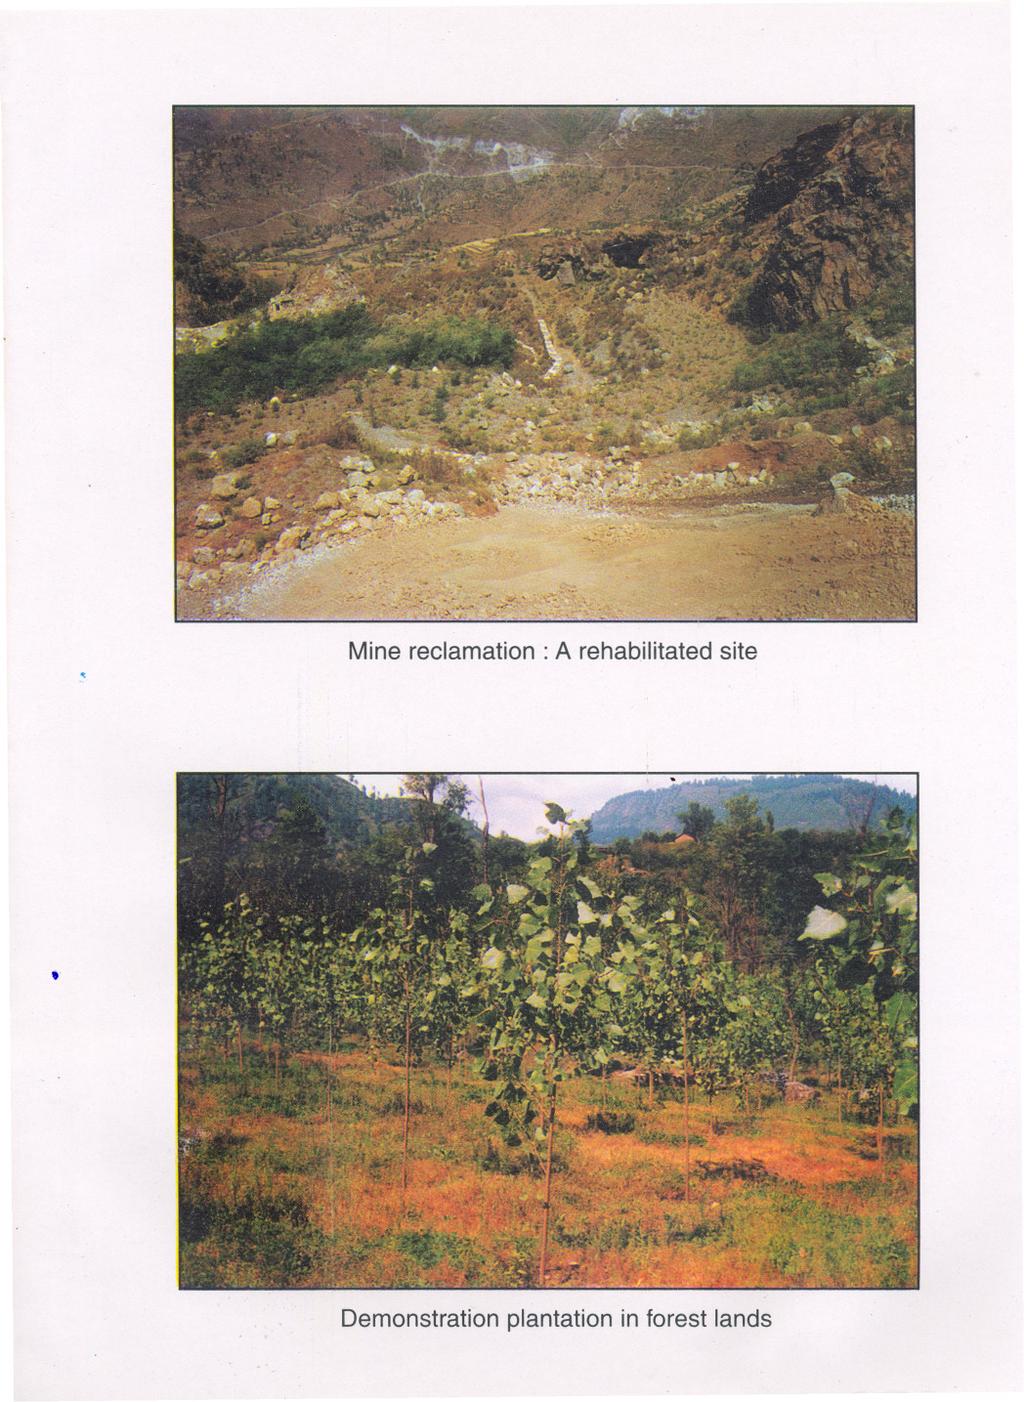 Mine reclamation: A rehabilitated site